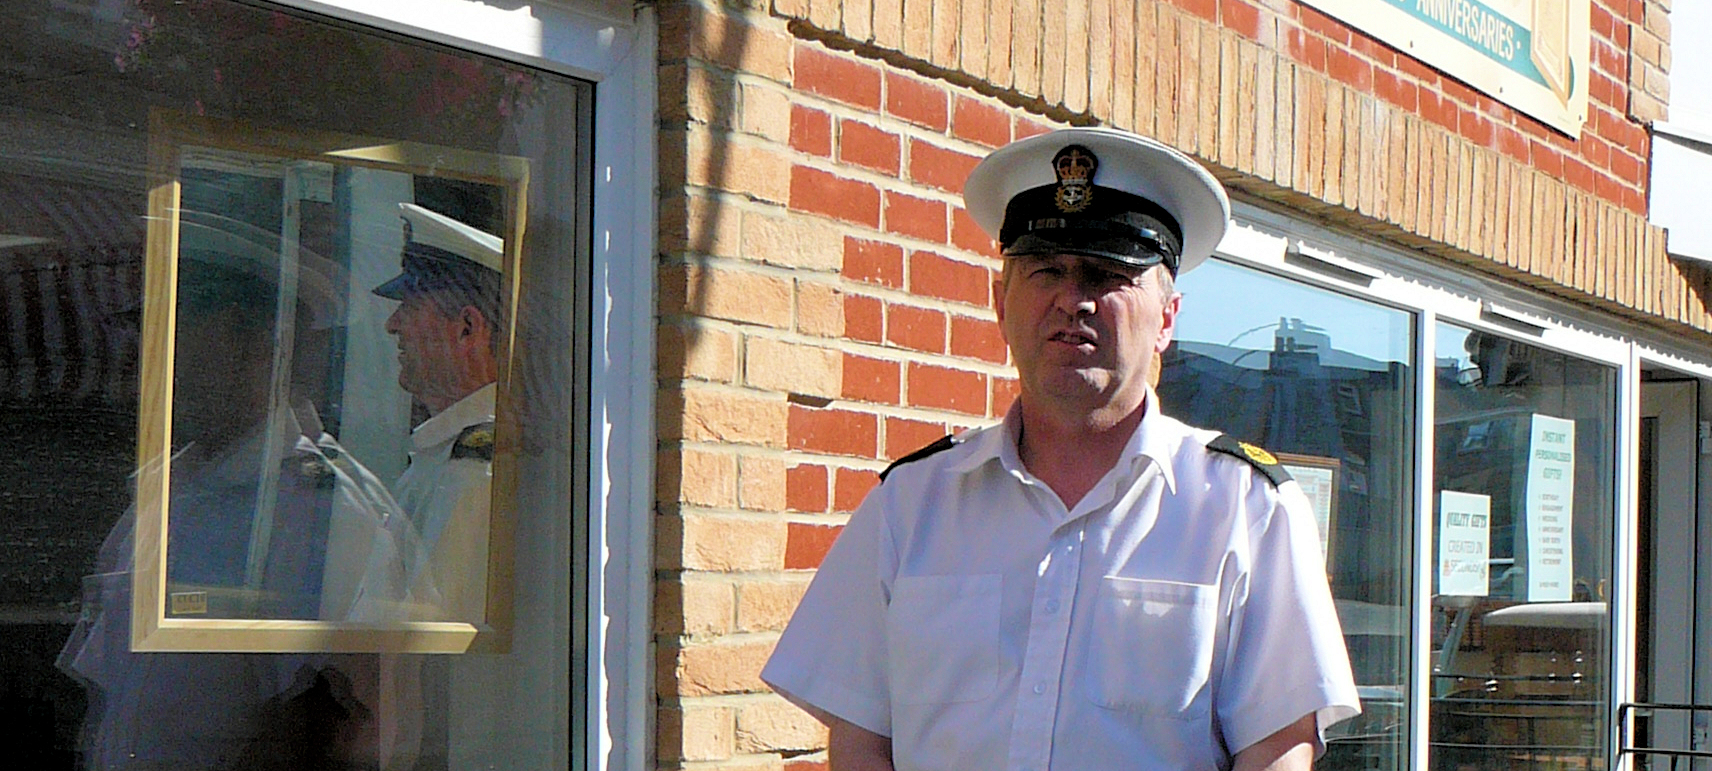 Blog Post Cover Image - John D Henry BA BSc of JD Photography outside shop in Royal Navy uniform.